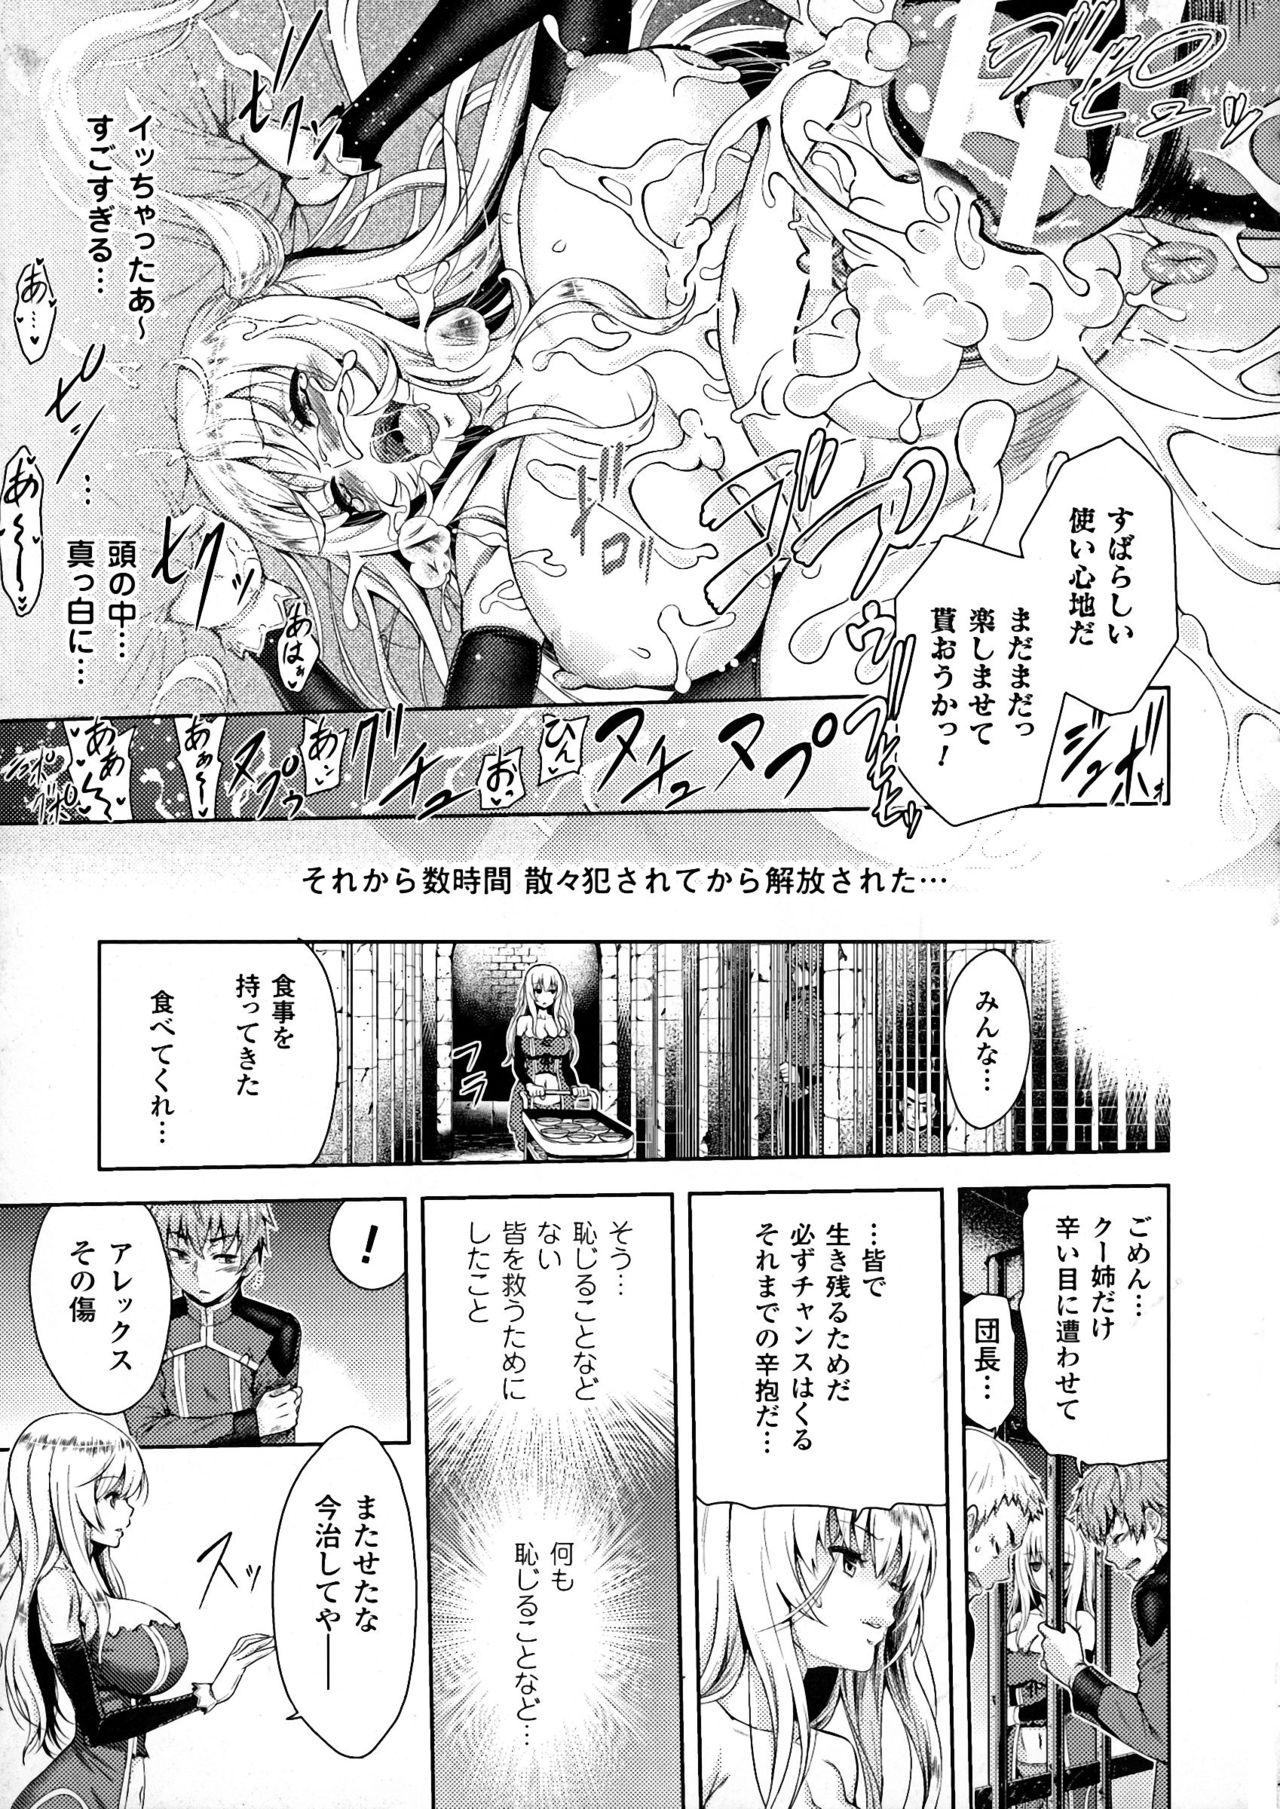 Seigi no Heroine Kangoku File DX Vol. 7 26